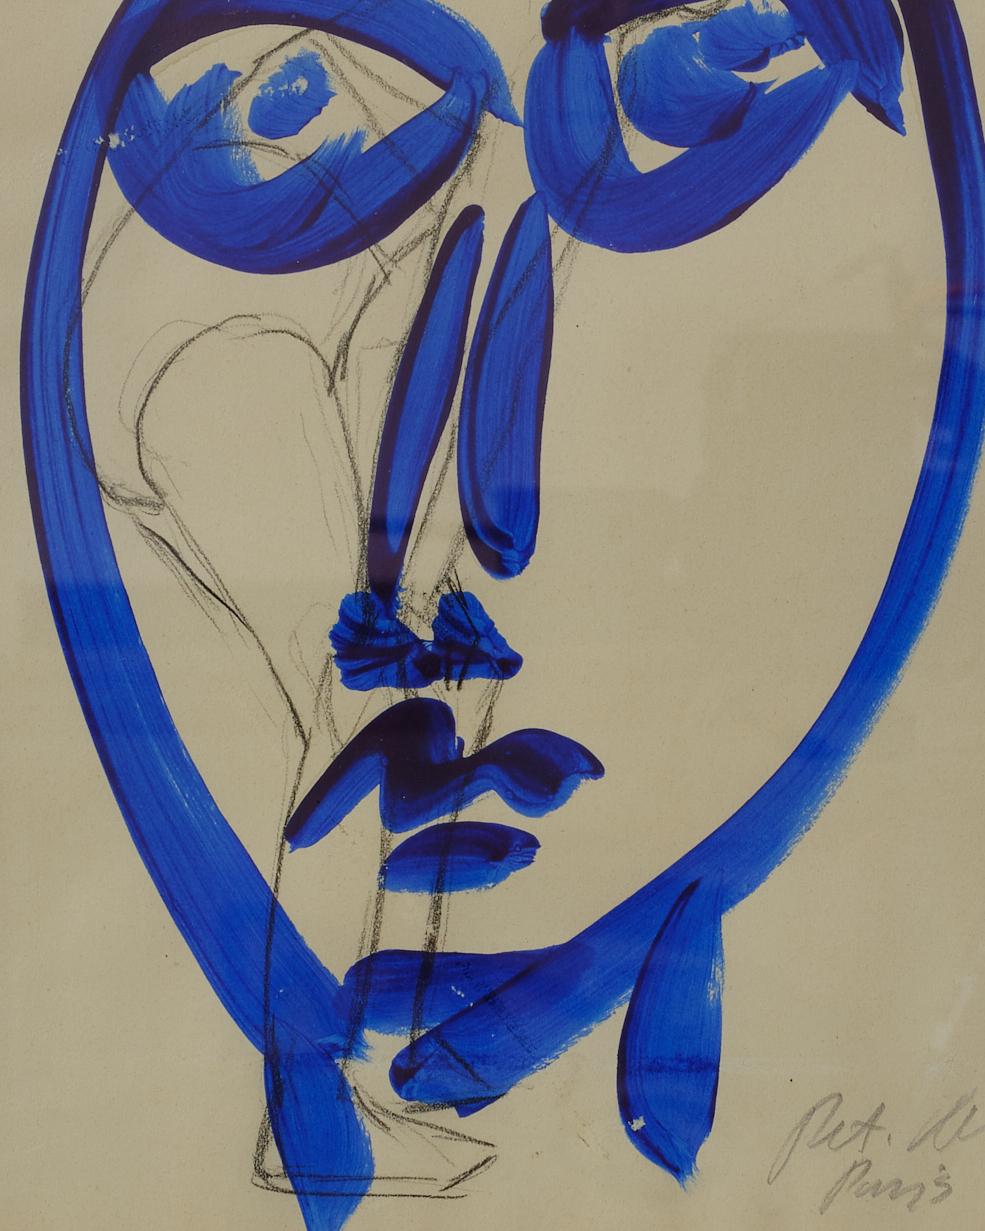 Painting by Peter Keil, Mid-Century Modern Art, 1965, on Paper, Painted in Paris 1